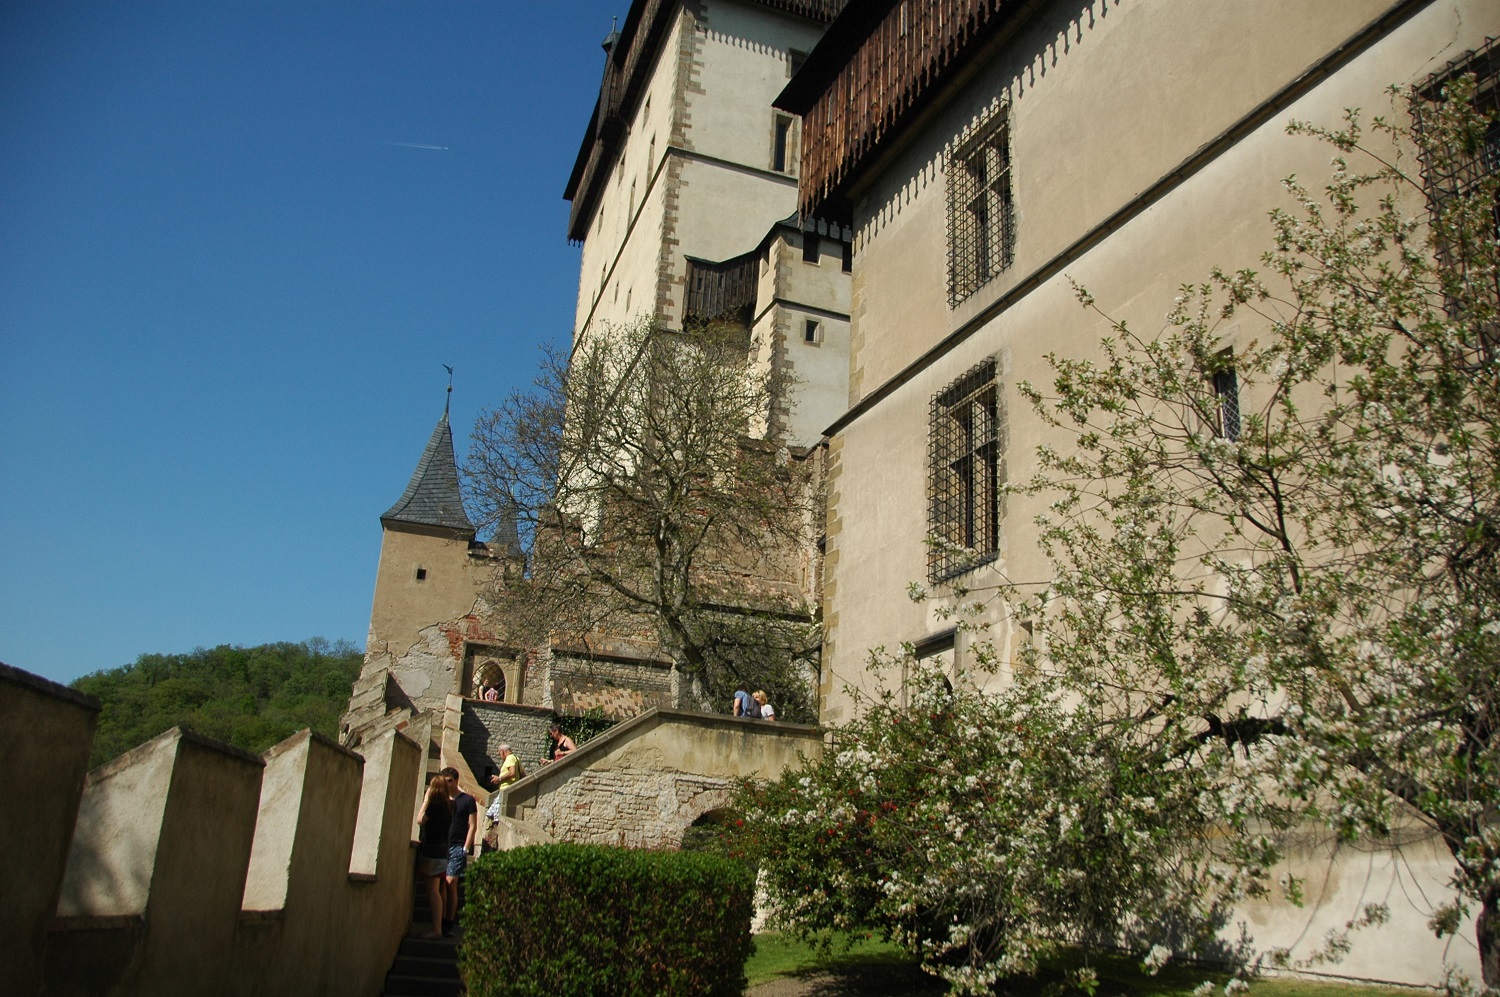 Czechy: zamek Karlstejn